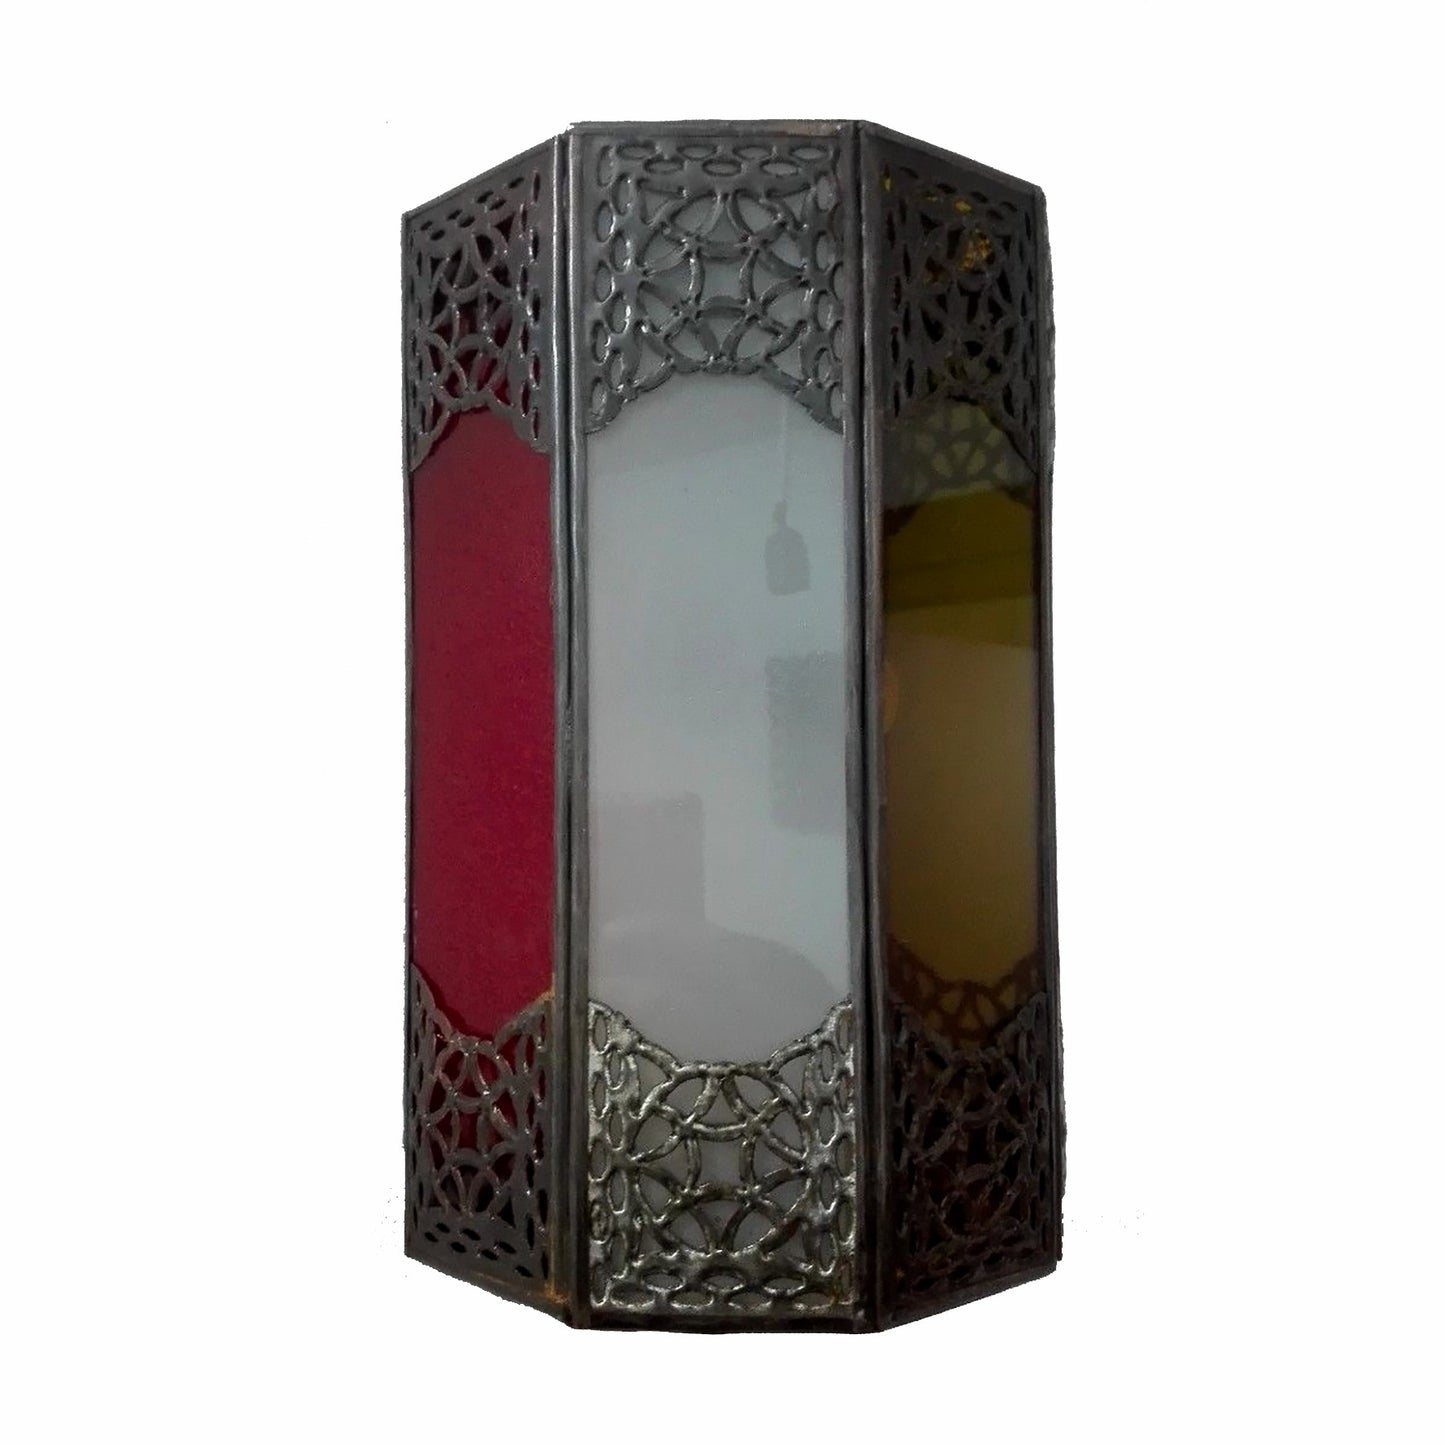 Wandlamp Aluminium en Marokkaans Glas Artisan Marokko Etnisch 1059